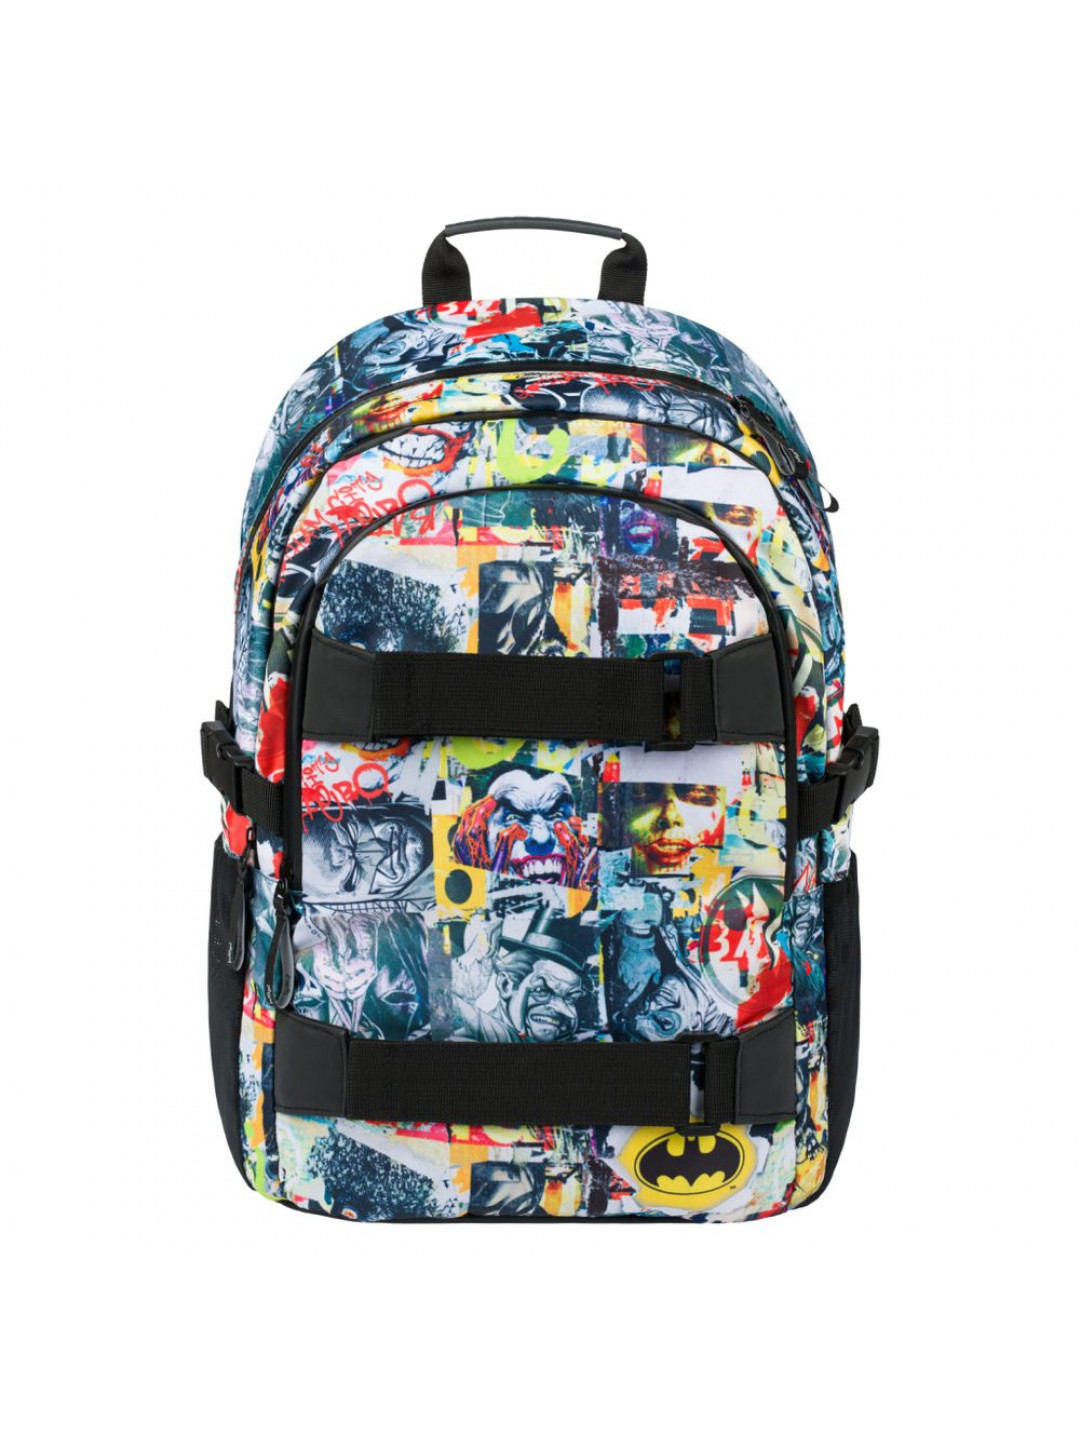 BAAGL Školní batoh Skate Batman Komiks 25 l